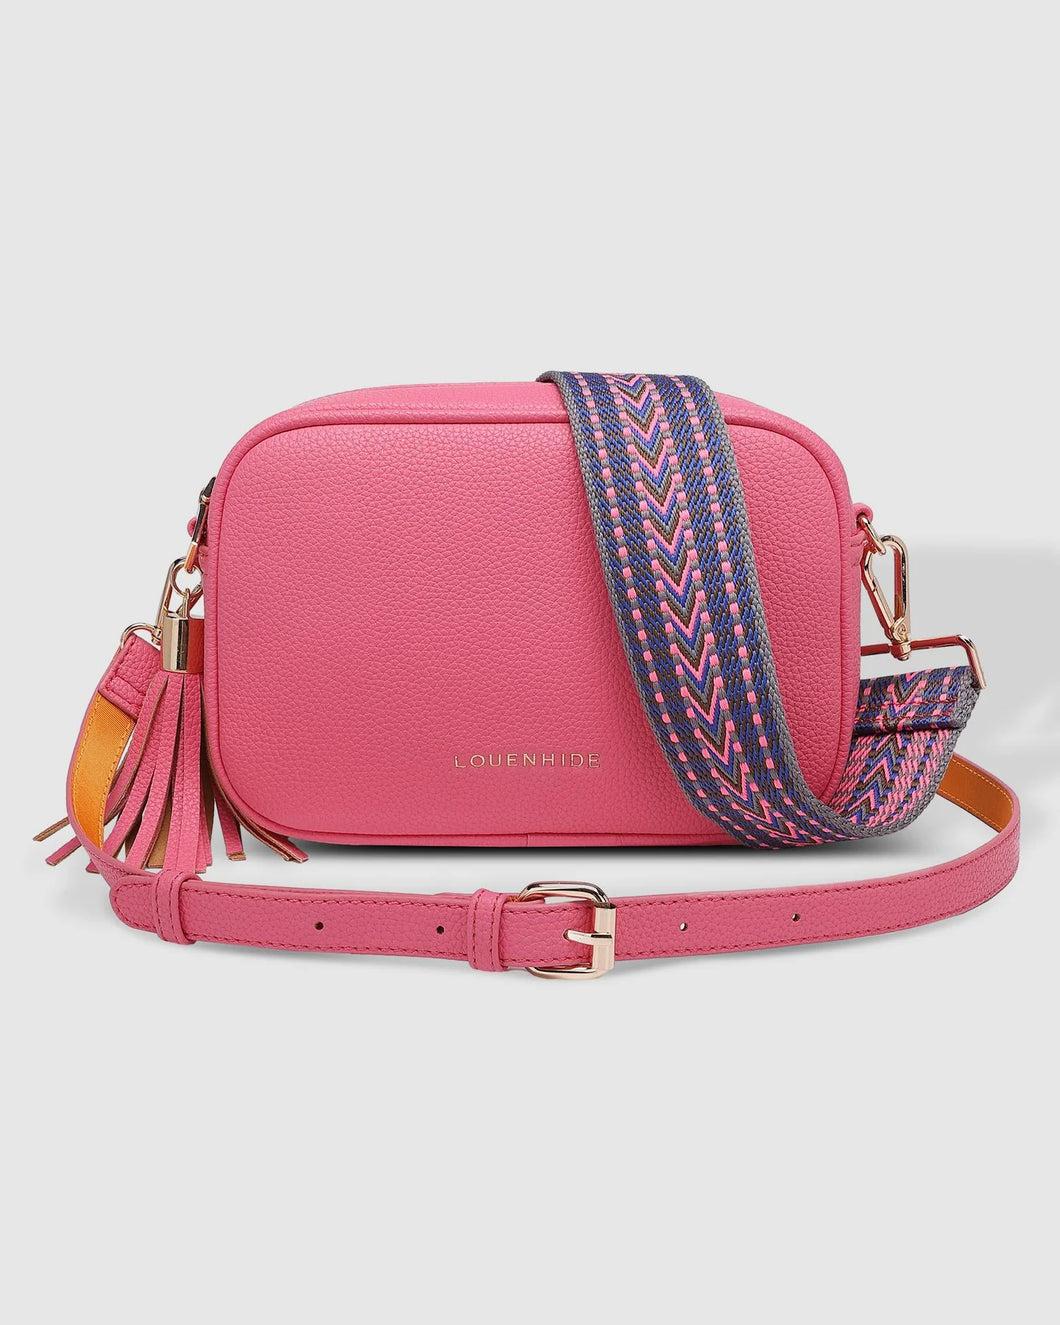 Handbag - Jacinta Crossbody Pink